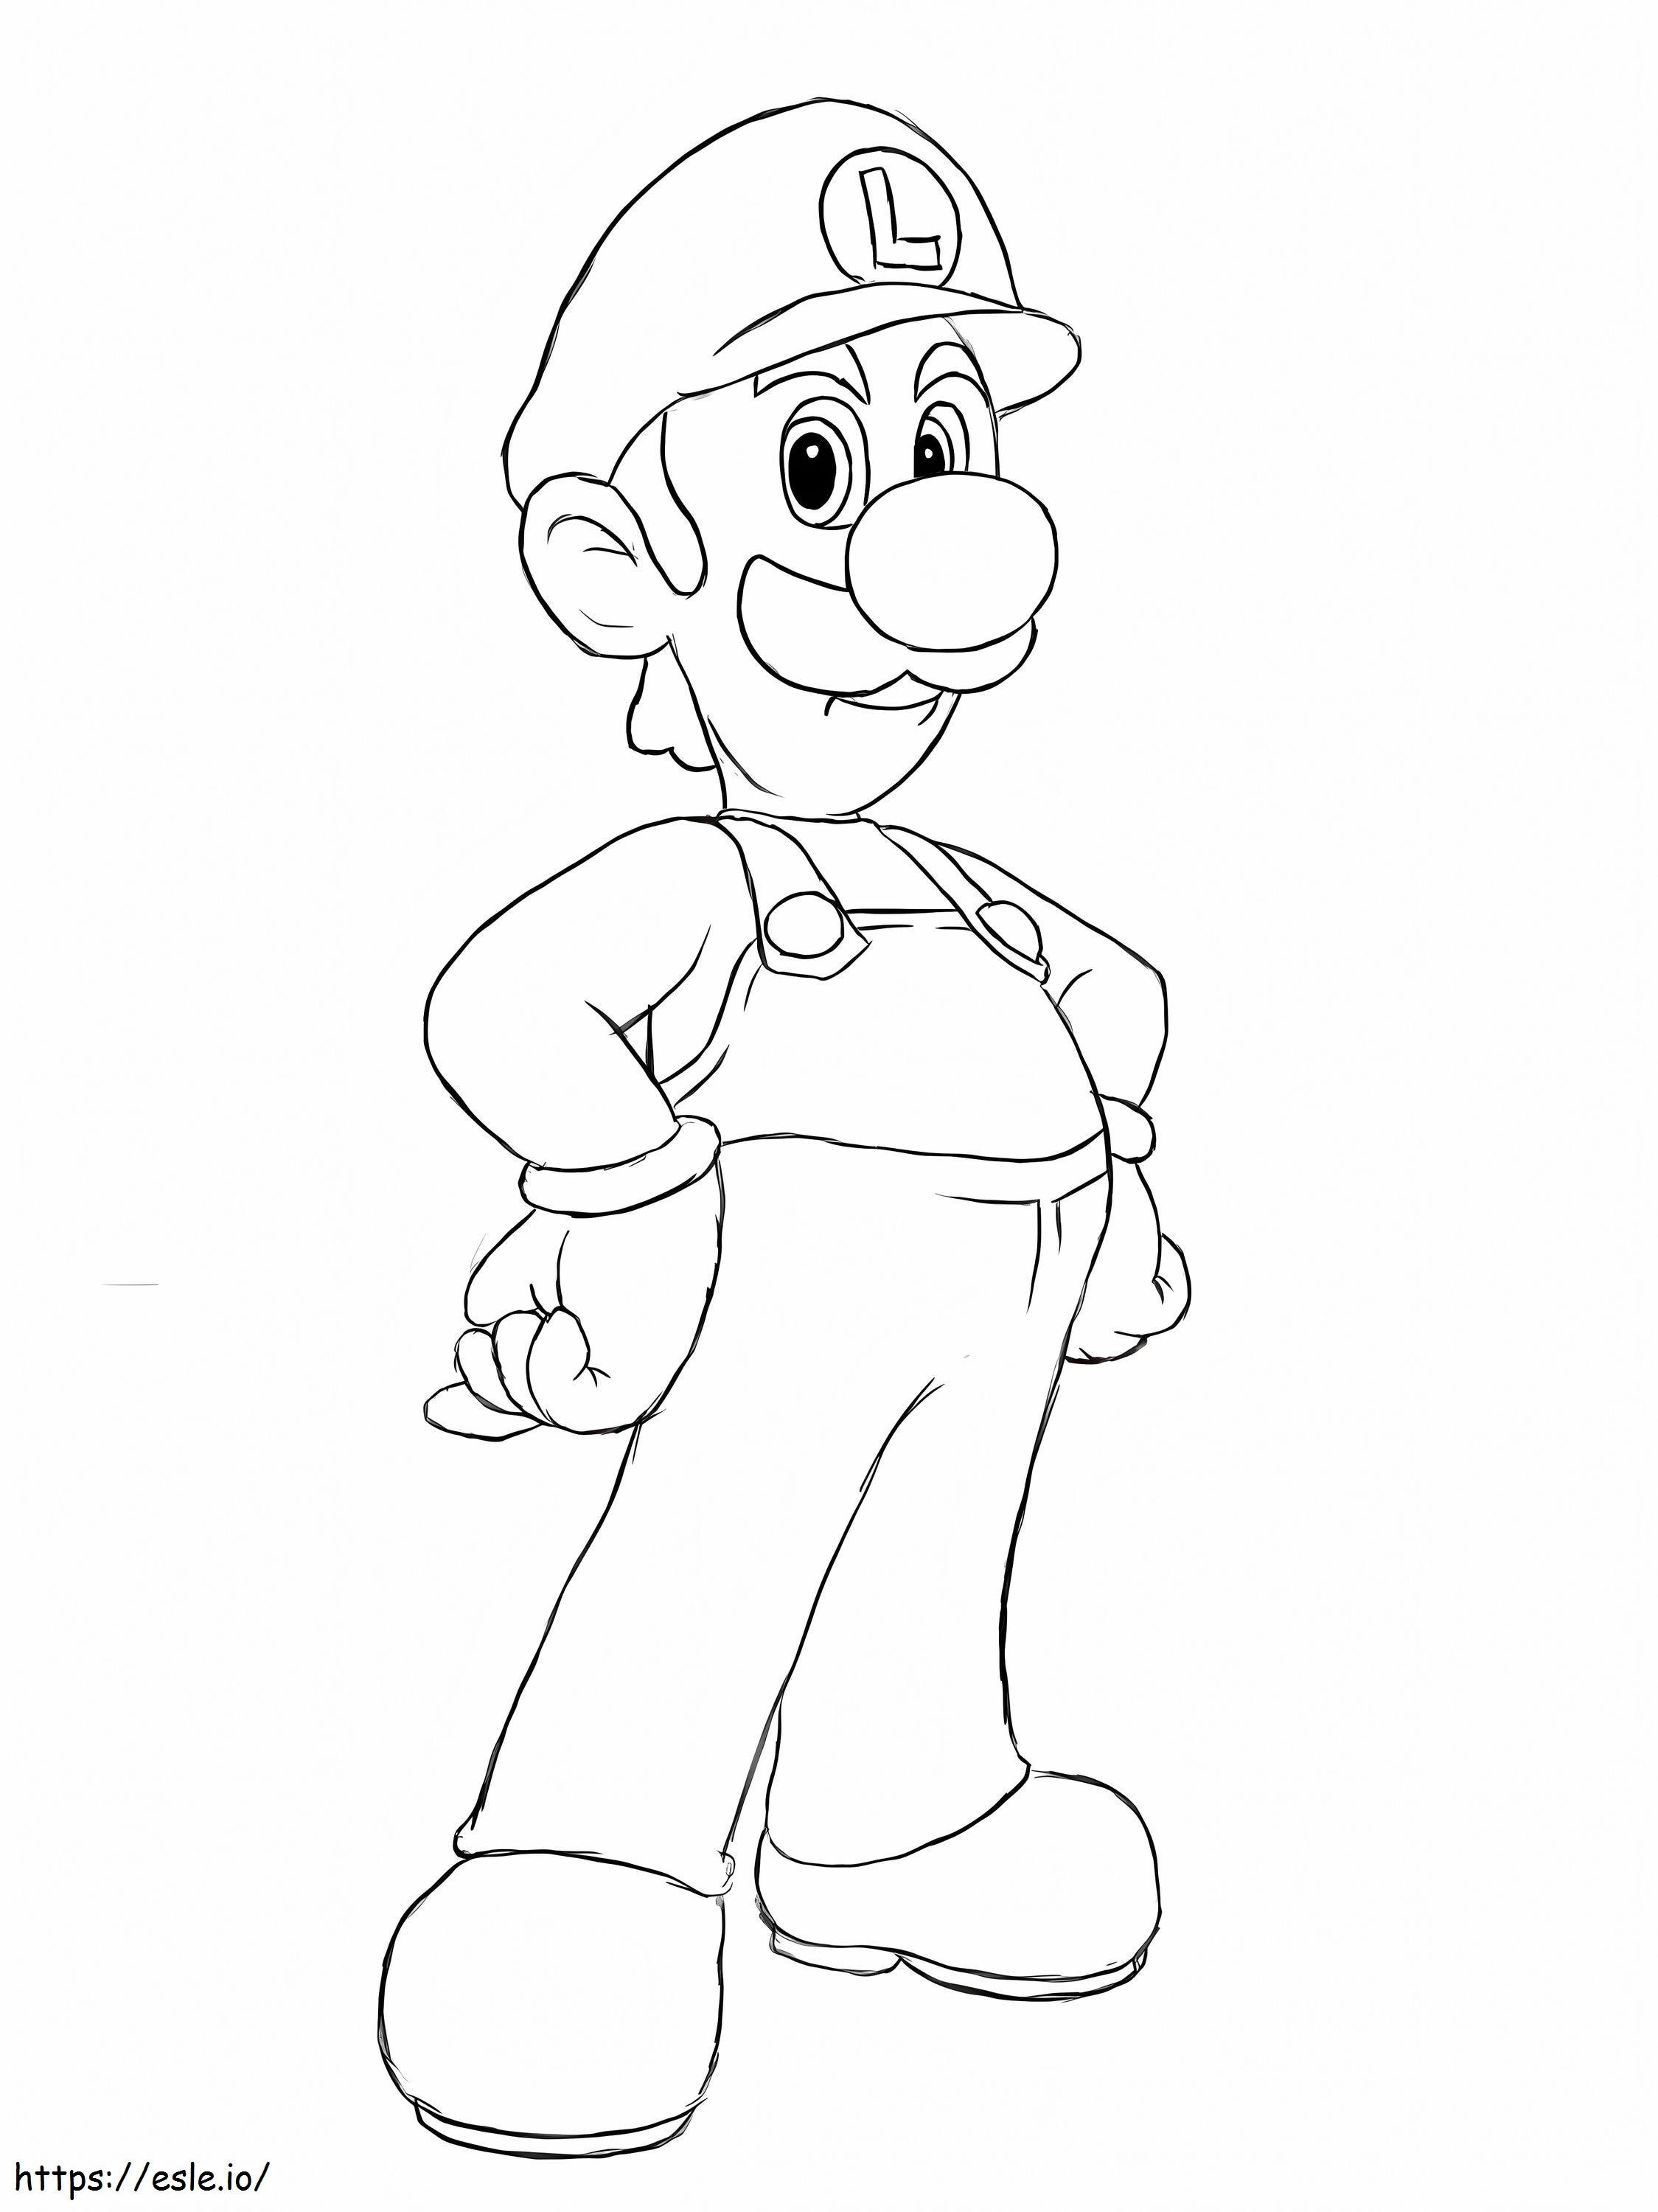 Luigi Drawing coloring page